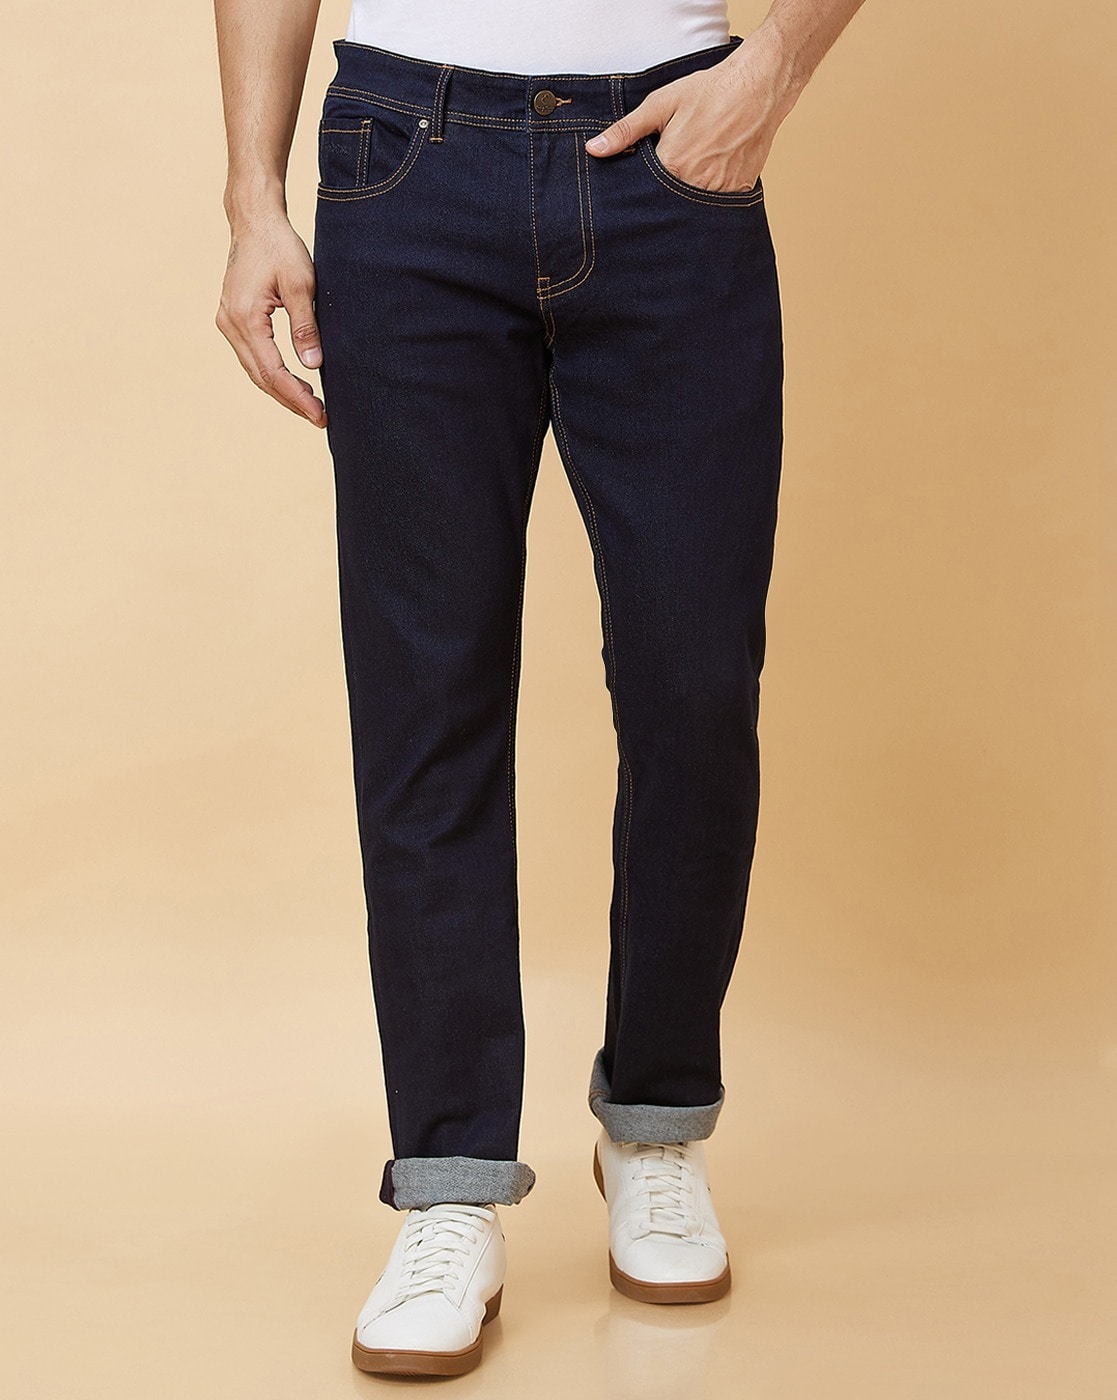 Ben Martin Men's Denim Cross Pocket Casual Slim Fit Dark Blue Jeans Size 30  : Amazon.in: Clothing & Accessories